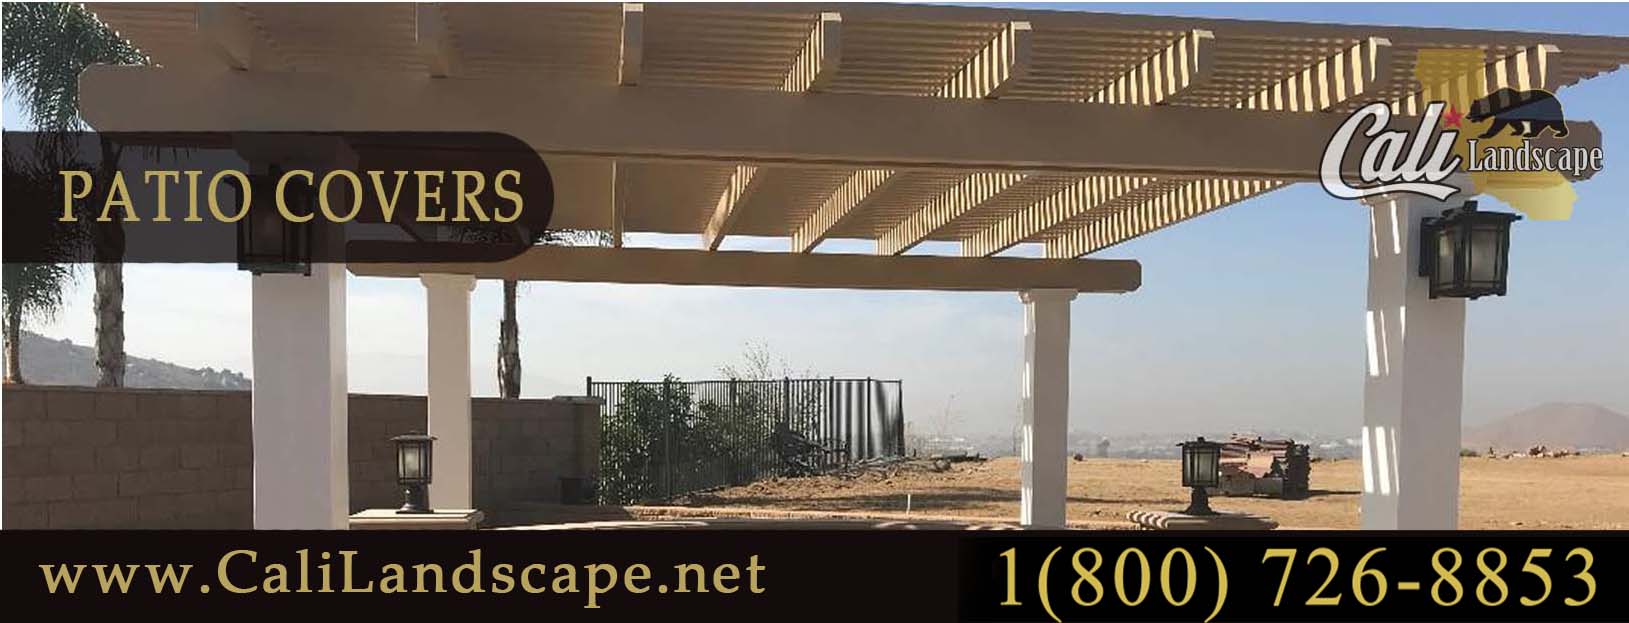 Cali Landscape Concrete Patio Covers Alumawood Solid or lattice Contractor in Corona buy sell repair Menifee Ca 